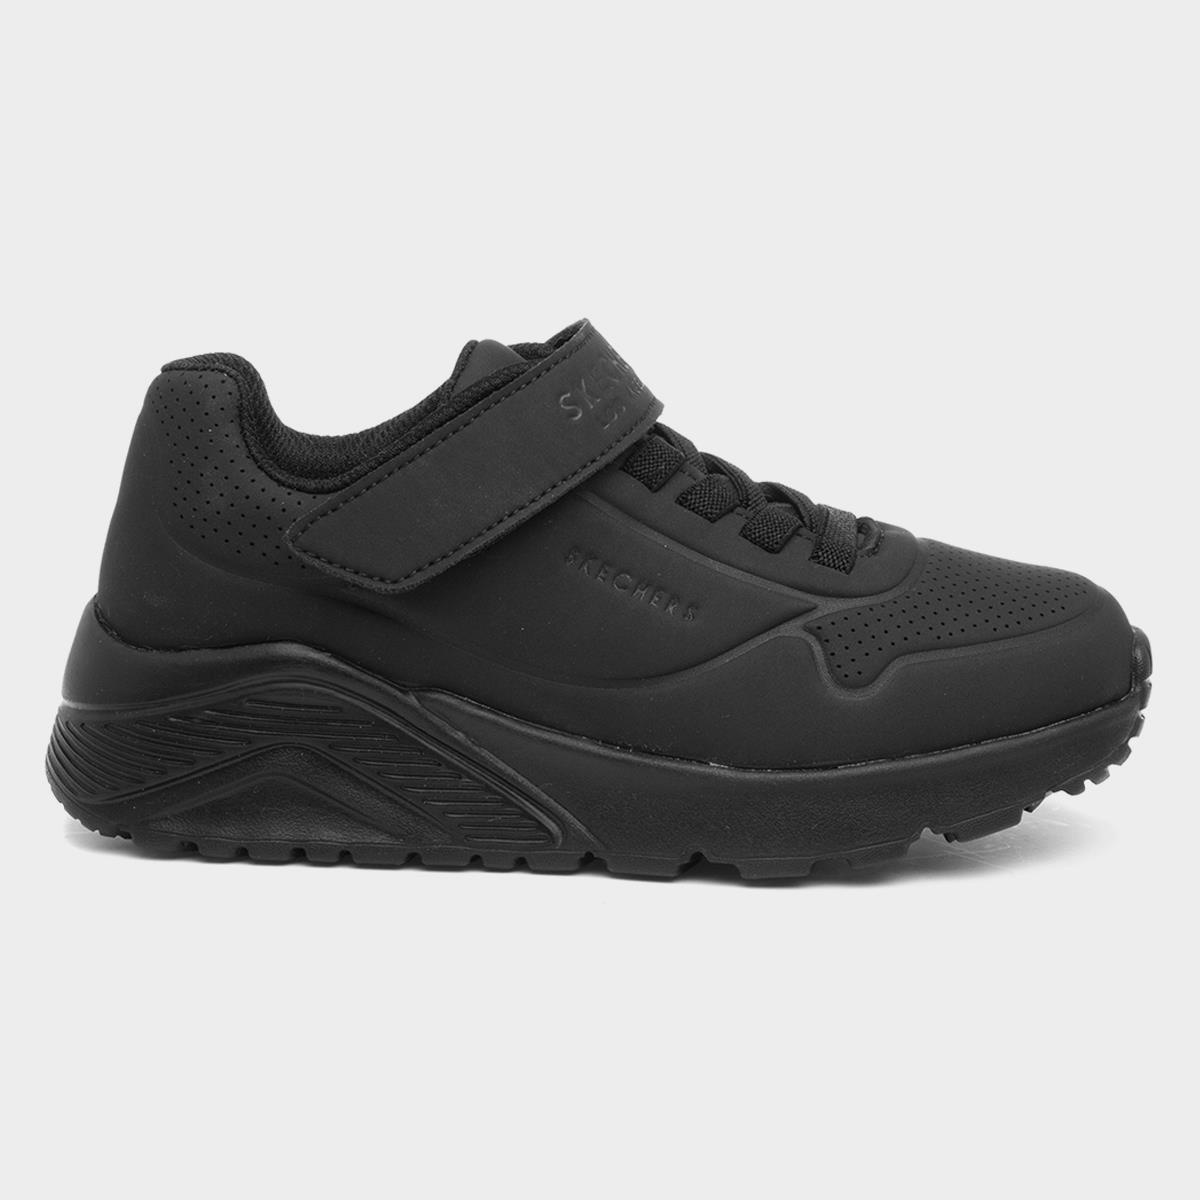 vooroordeel onwettig identificatie Skechers Uno Lite Vendox Kids Black Shoe-203009 | Shoe Zone